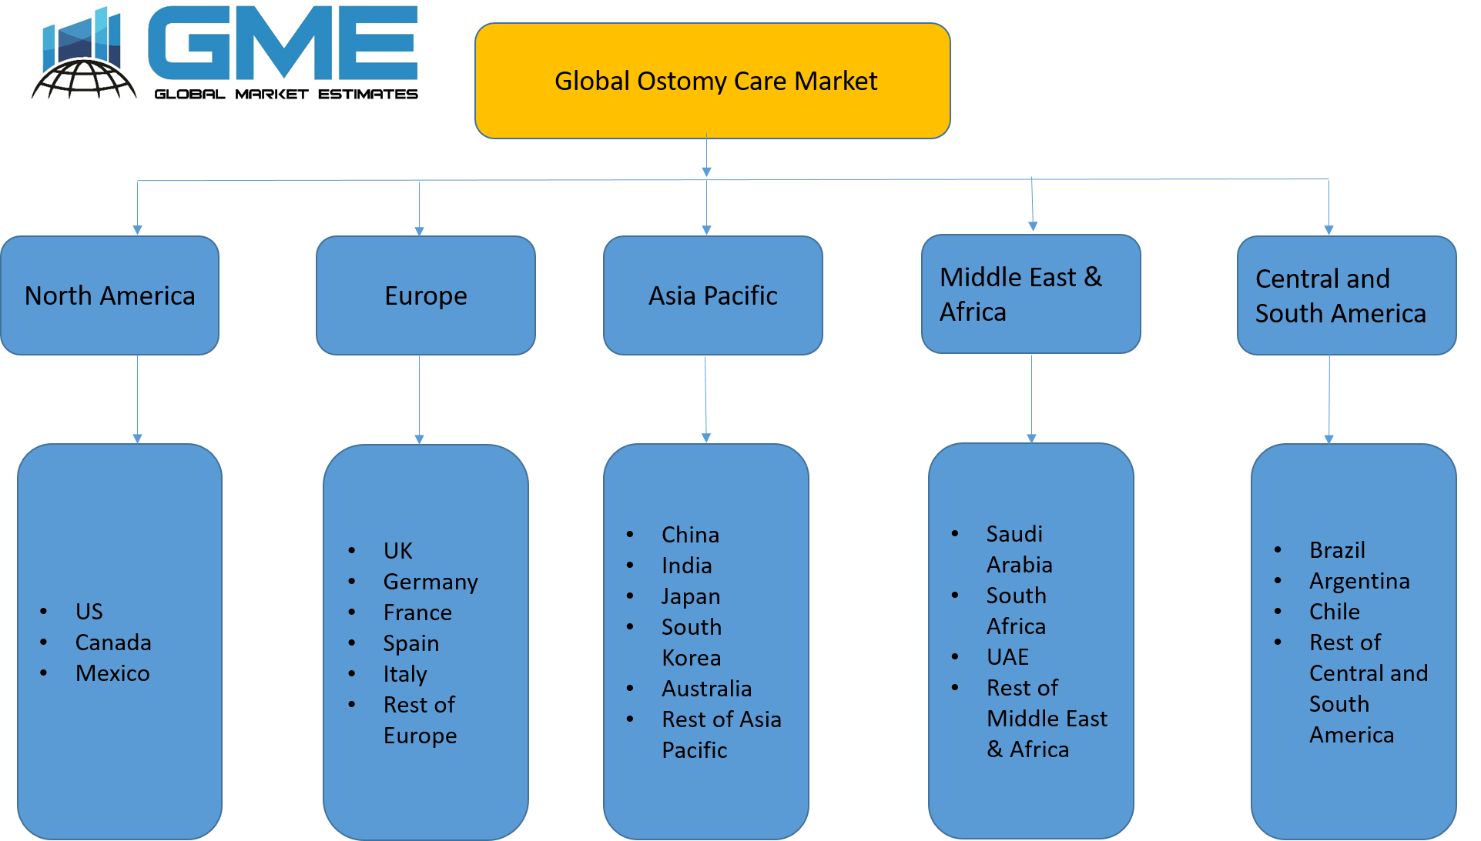 Global Ostomy Care Market - Regional Analysis